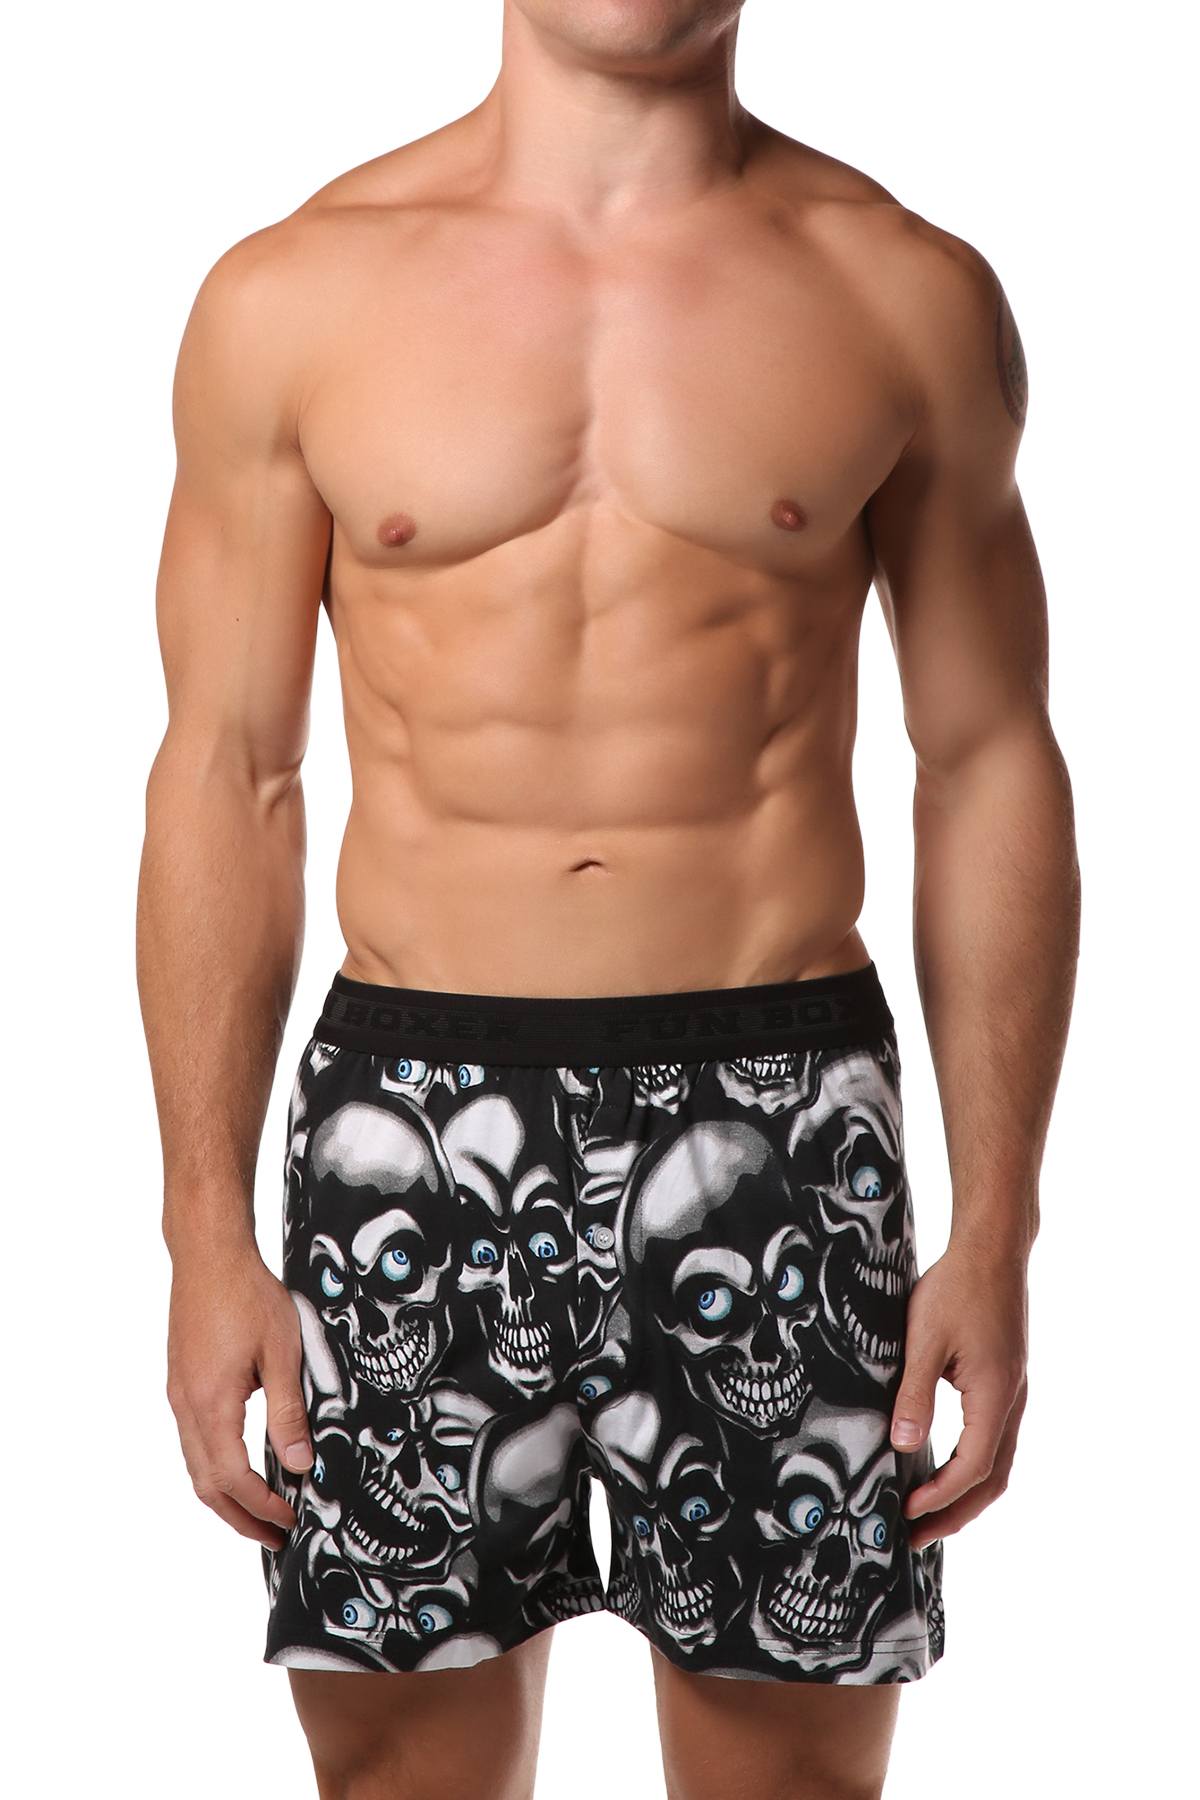 Fun Boxers Black Creepy Skulls Boxer Short